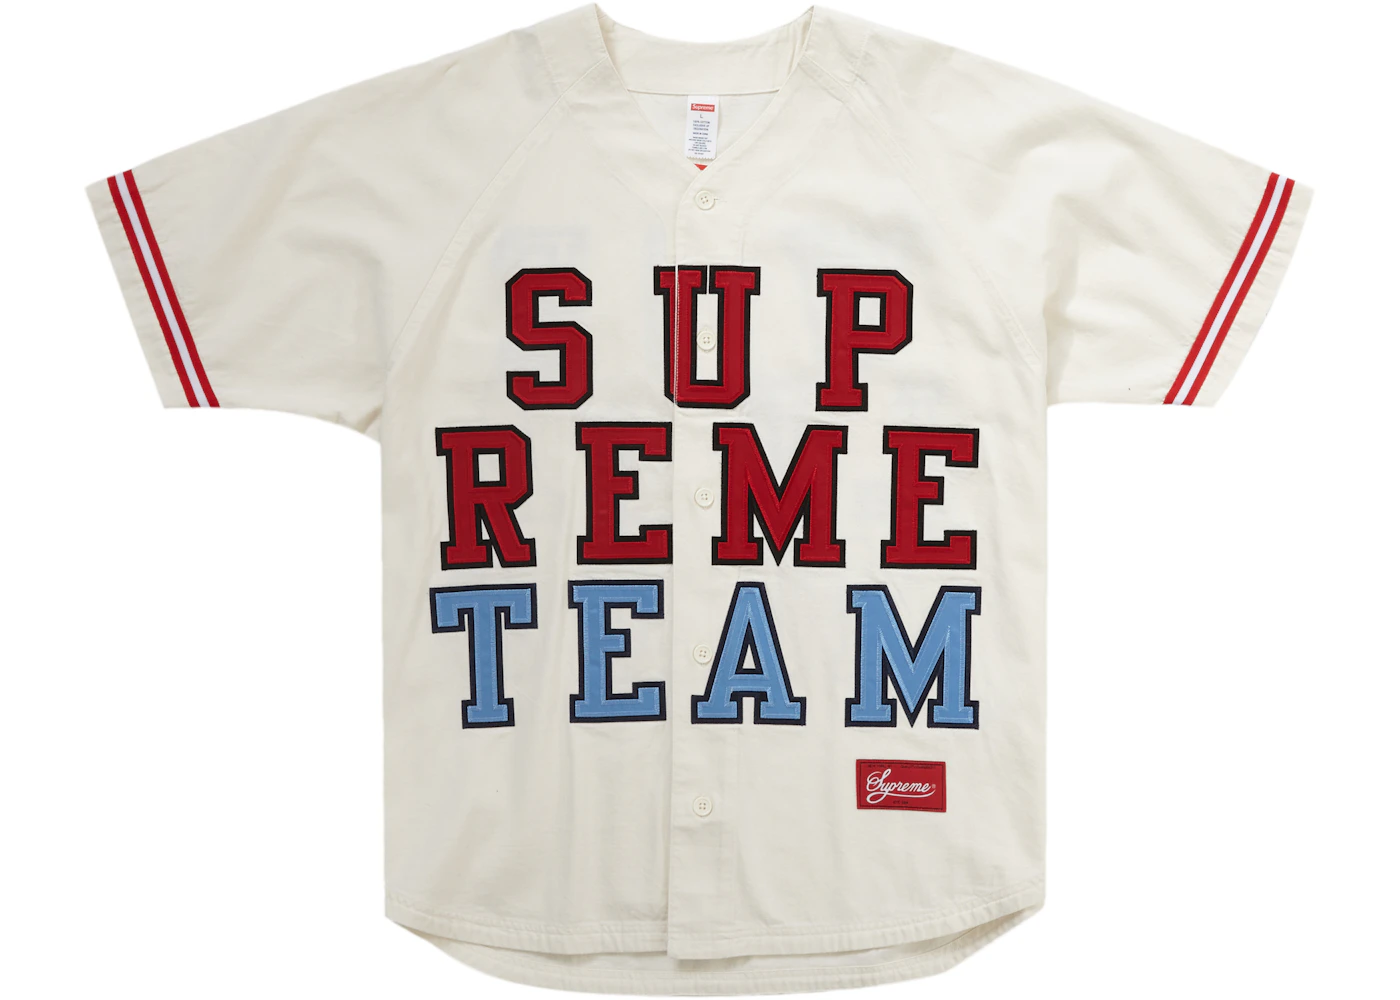 Supreme Denim Flannel baseball shirt ss14